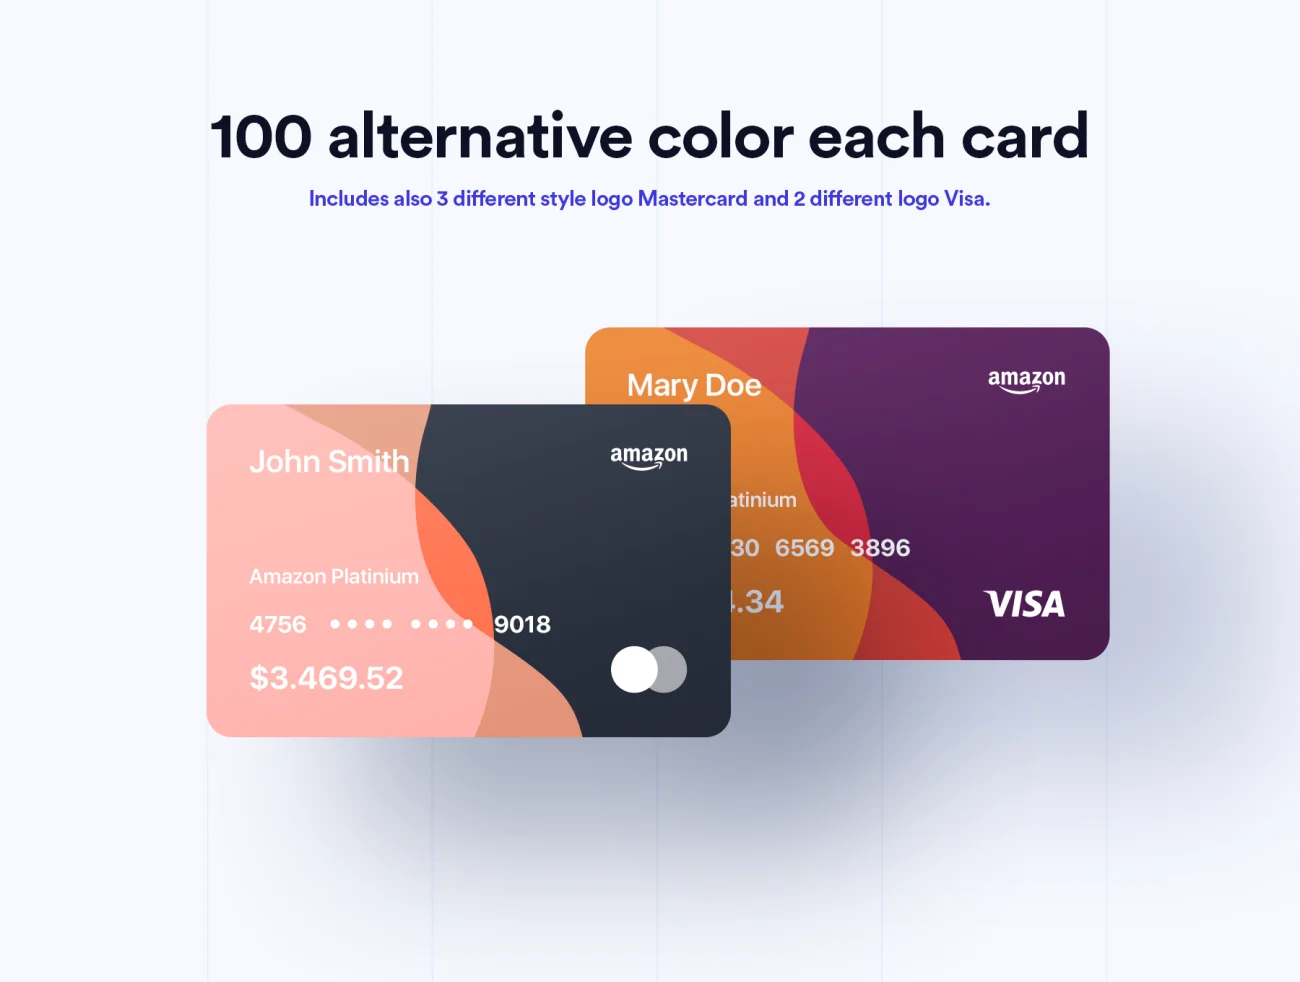 100 Financial Virtual Design Cards 100张矢量金融虚拟电子卡片设计集合-UI/UX、卡片式、商业金融、图案设计、设计元素、金融理财-到位啦UI